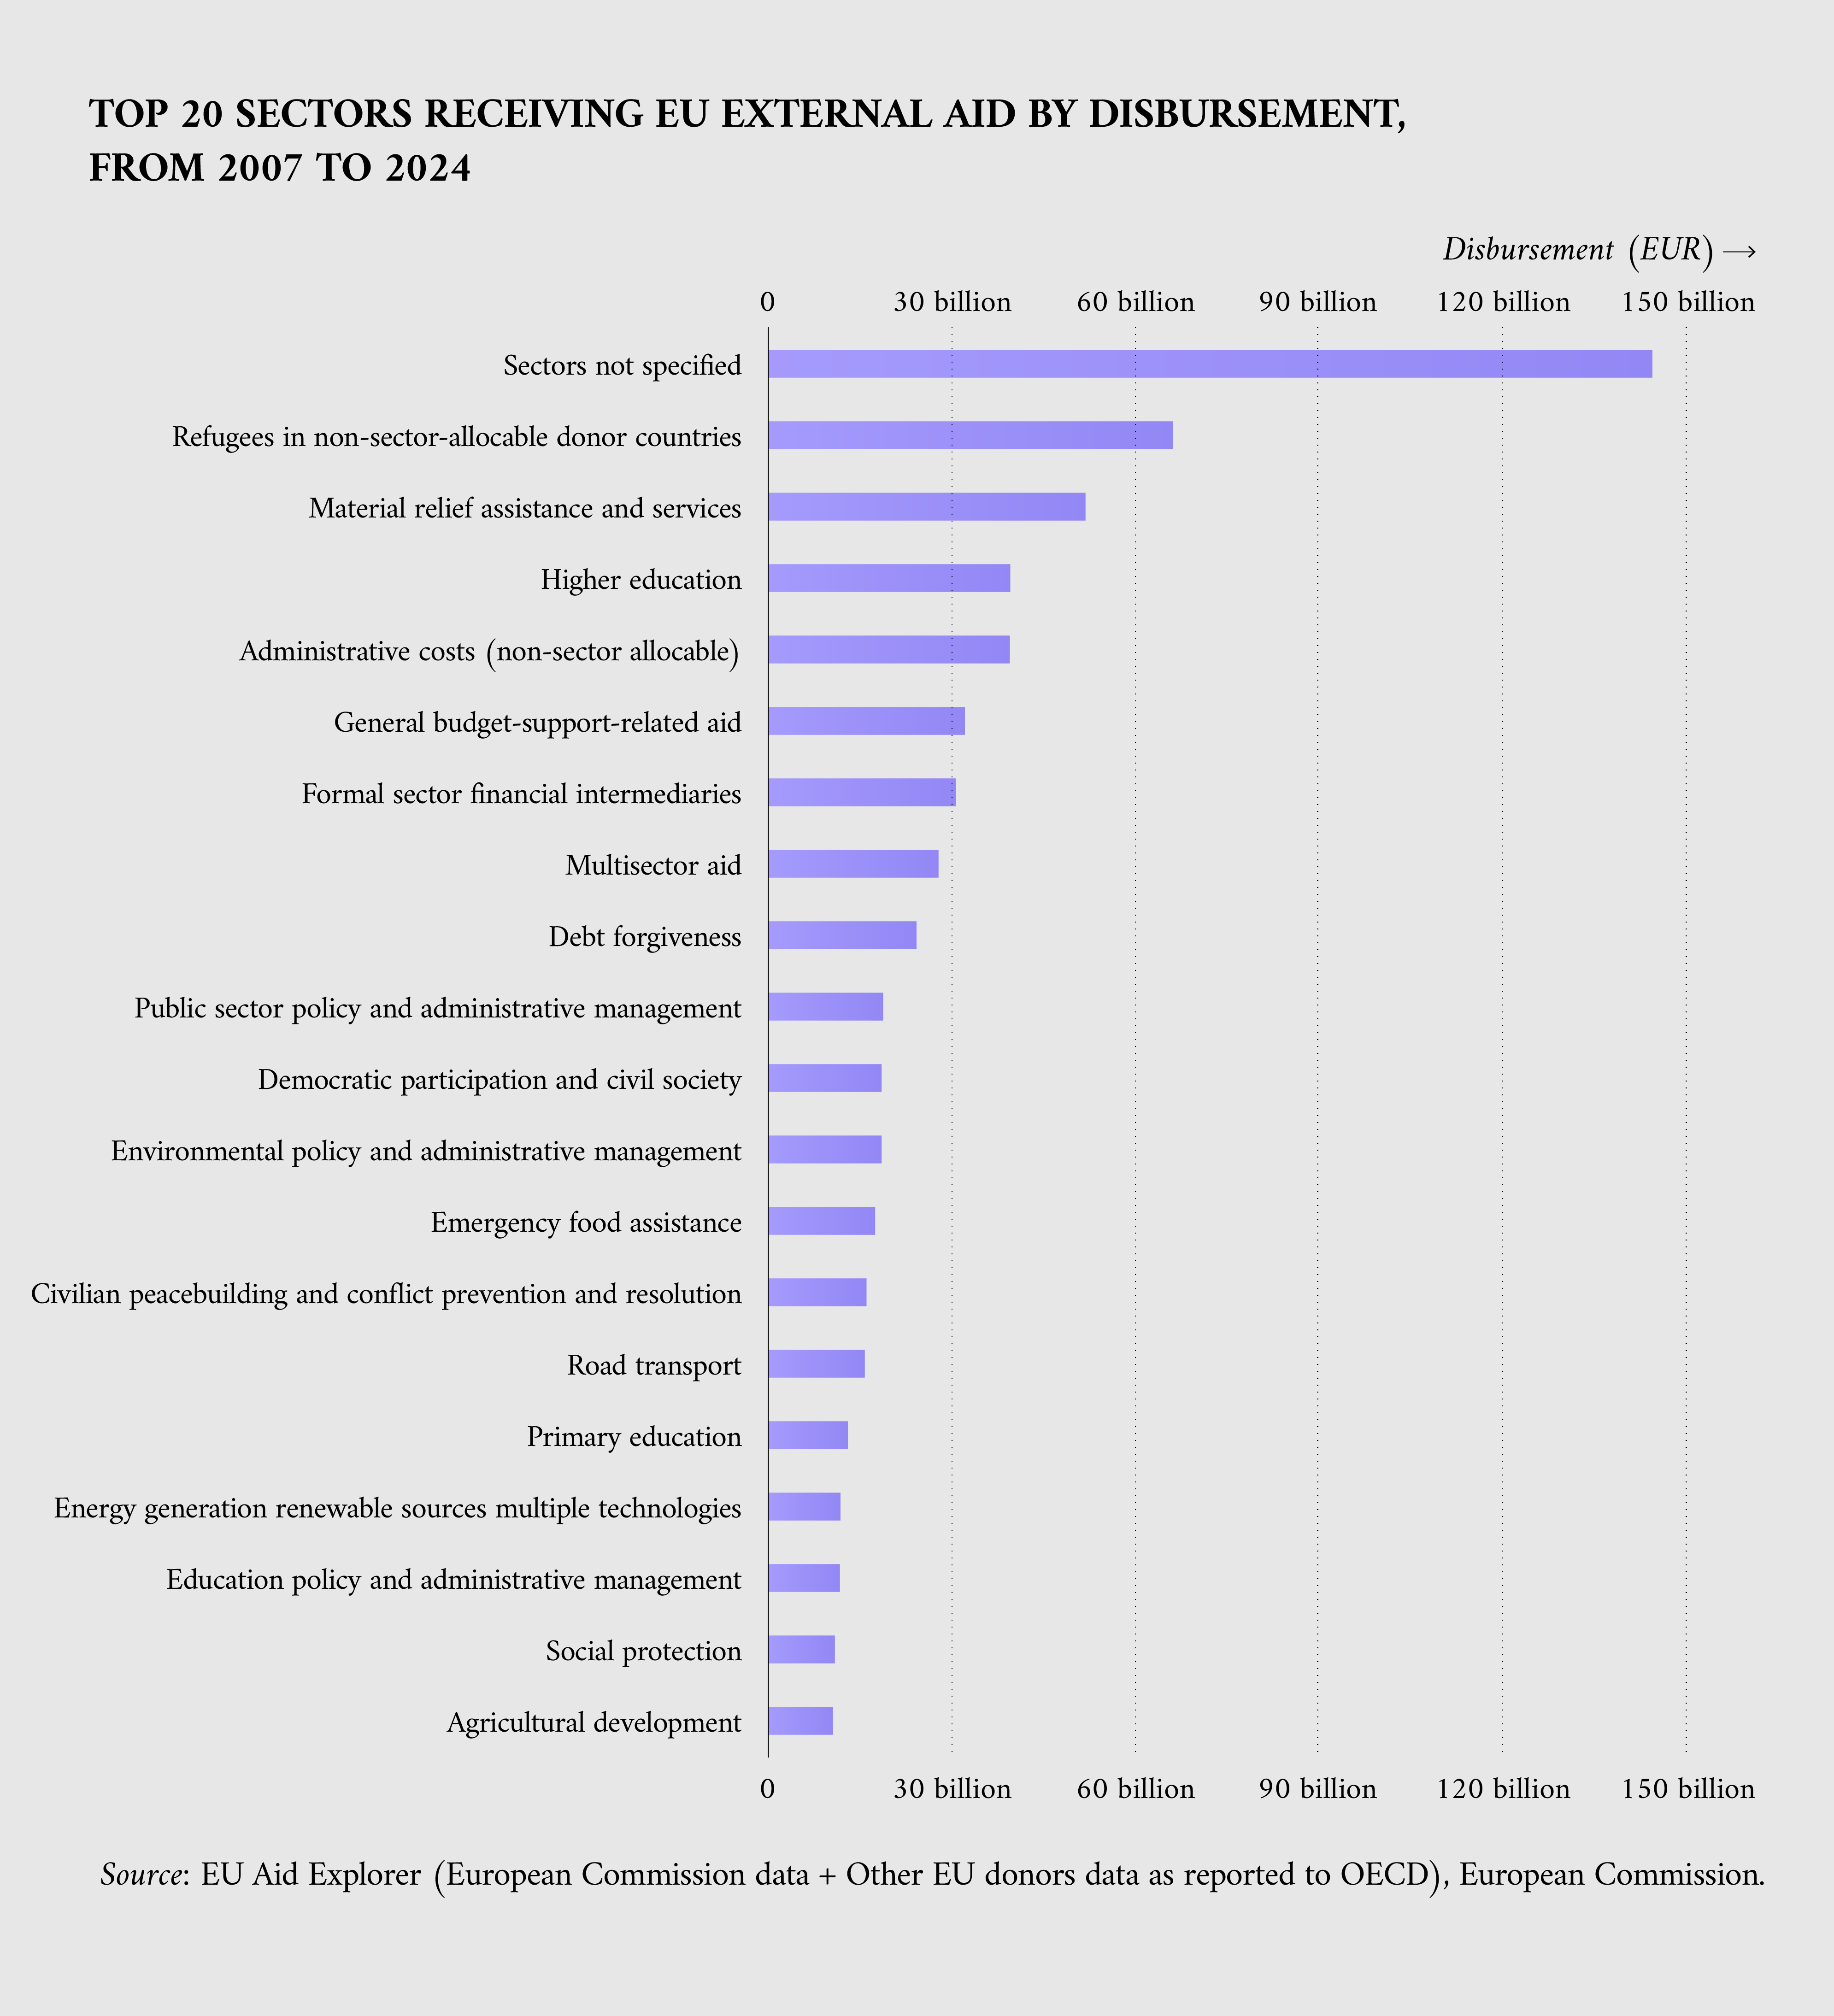 Figure 3: Top 20 categories receiving EU external aid by disbursement from 2007 to 2024 (Source: EU Aid Explorer, European Commission) 